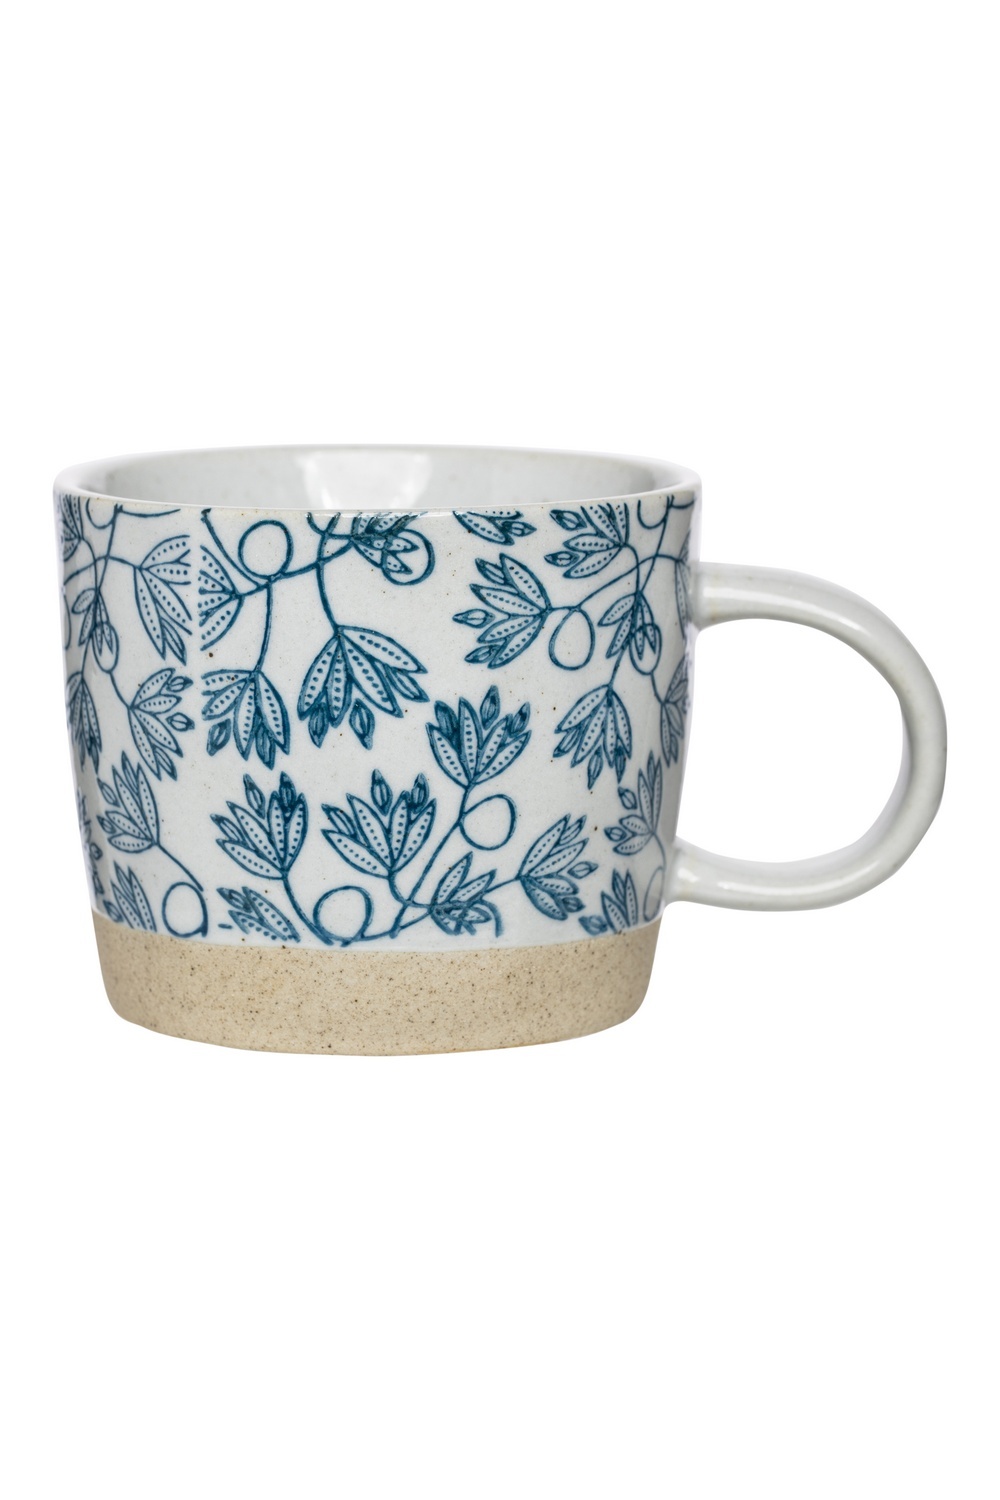 Tranquillo Mug Rustic - Floral pattern